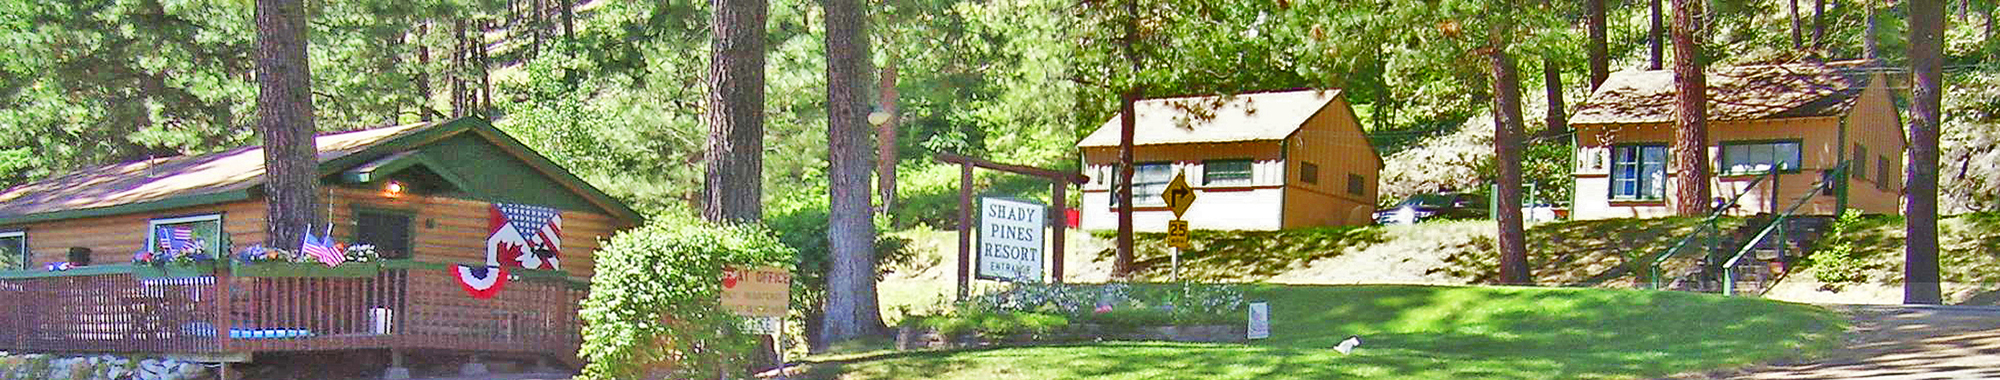 Shady Pines Resort